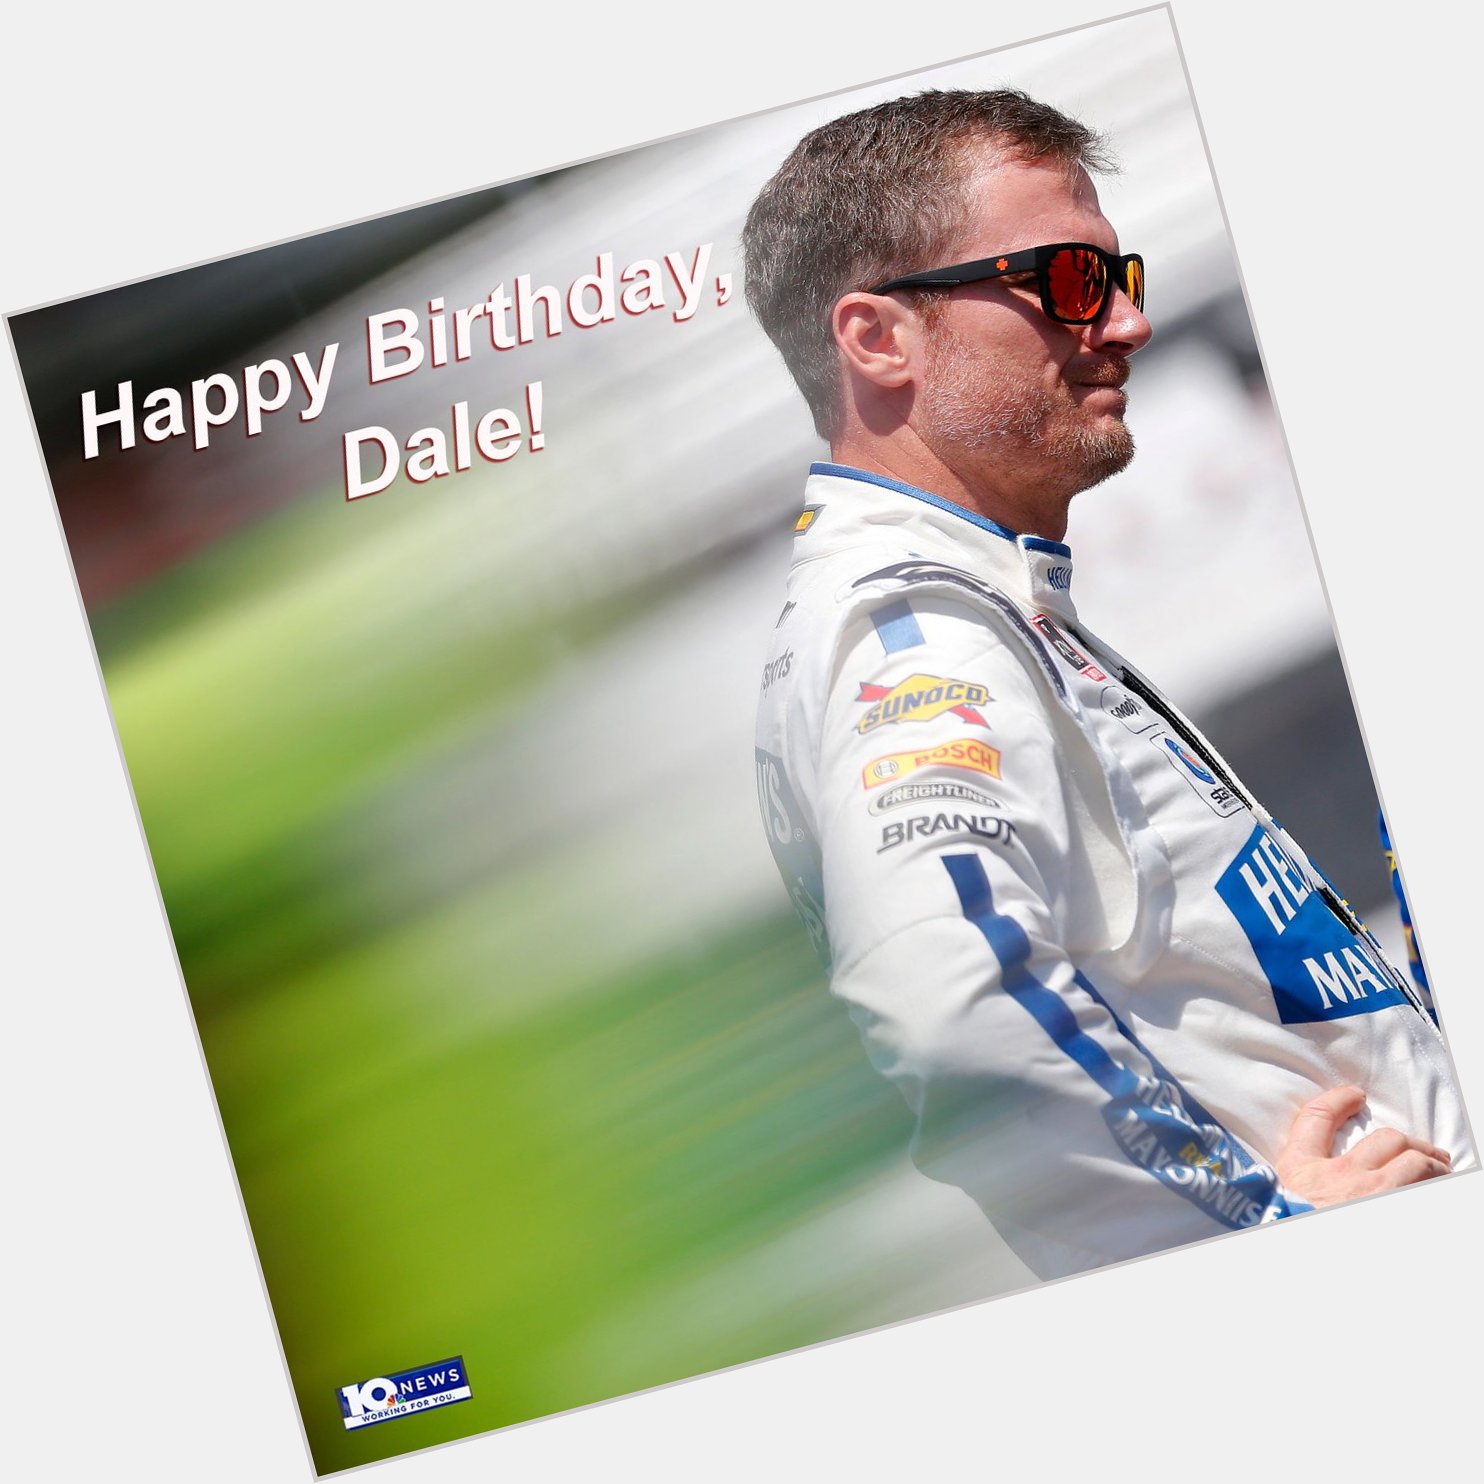 A happy 45th birthday to semi-retired NASCAR driver Dale Earnhardt Jr.! 